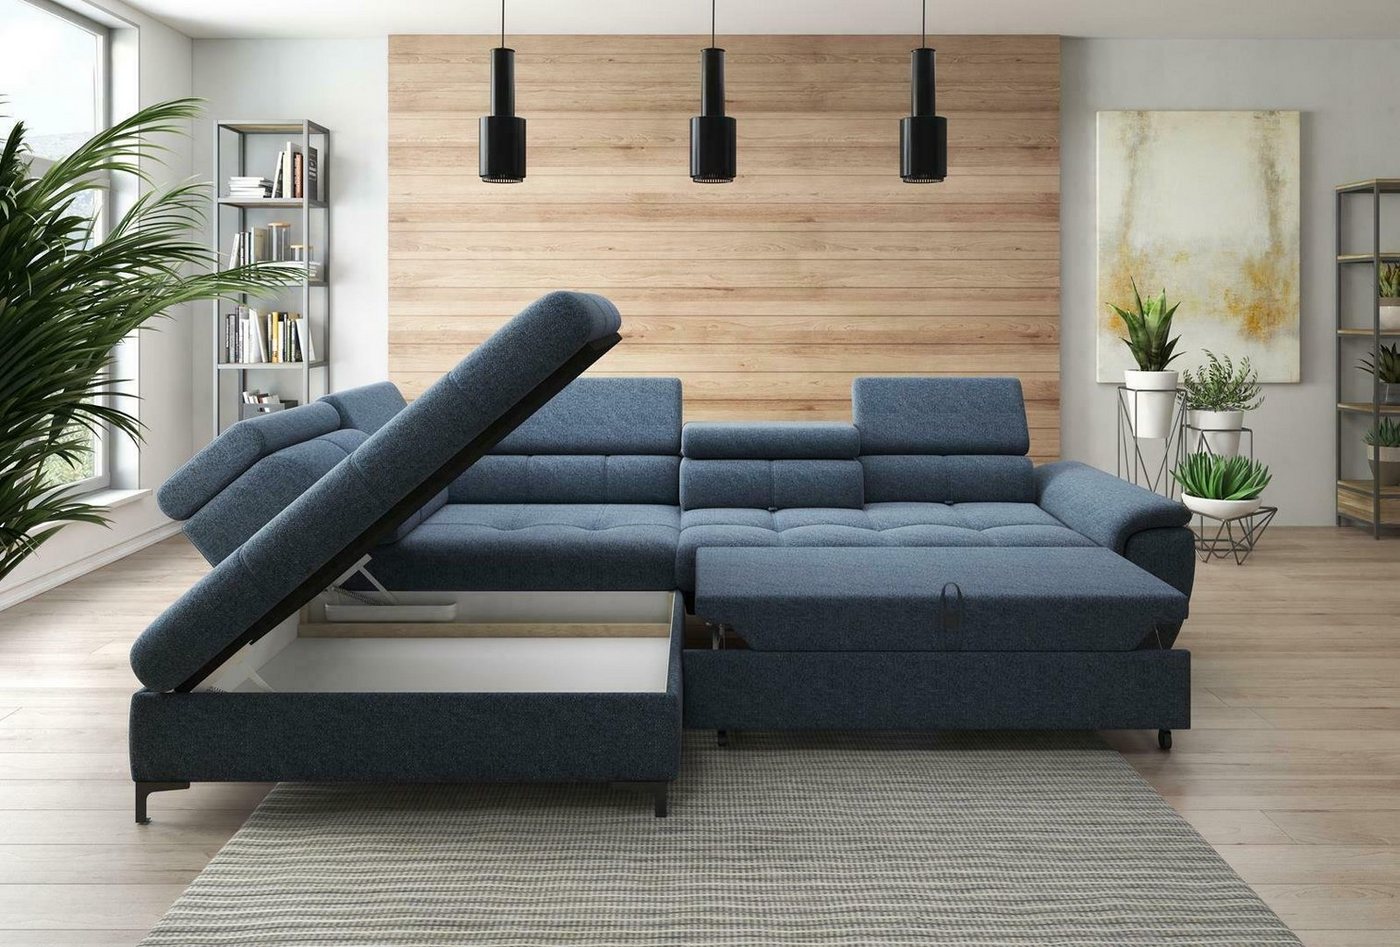 JVmoebel Ecksofa L-Form Sofa Couch Design Polster Schlafsofa Textil Bettfunktion Textil, Mit Bettfunktion von JVmoebel